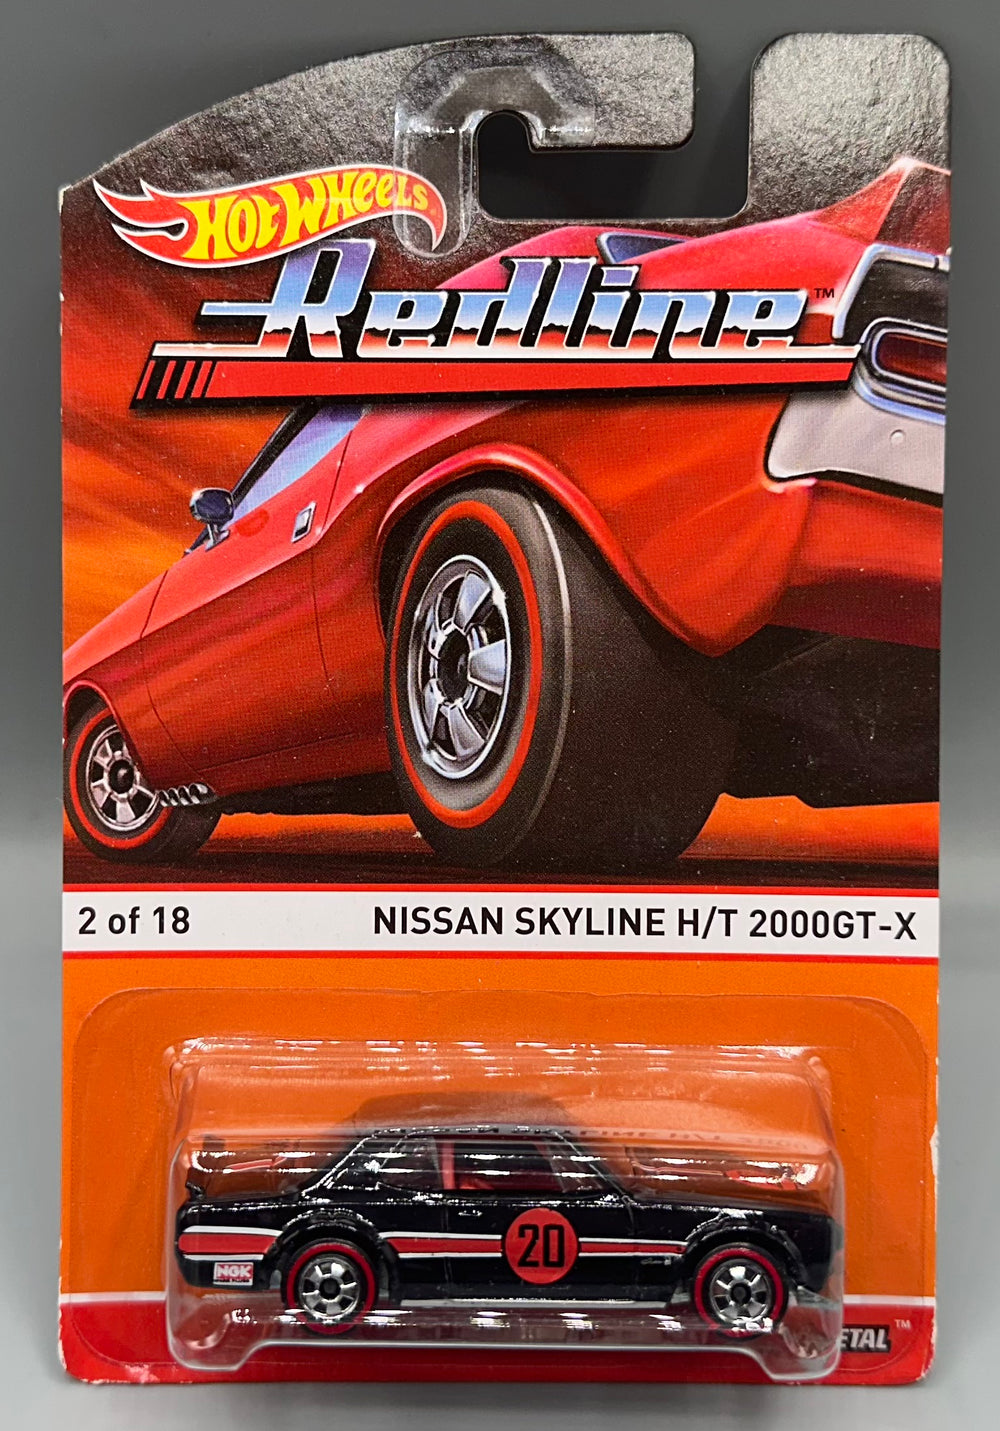 Hot Wheels Redline Nissan Skyline H/T 2000GT-X